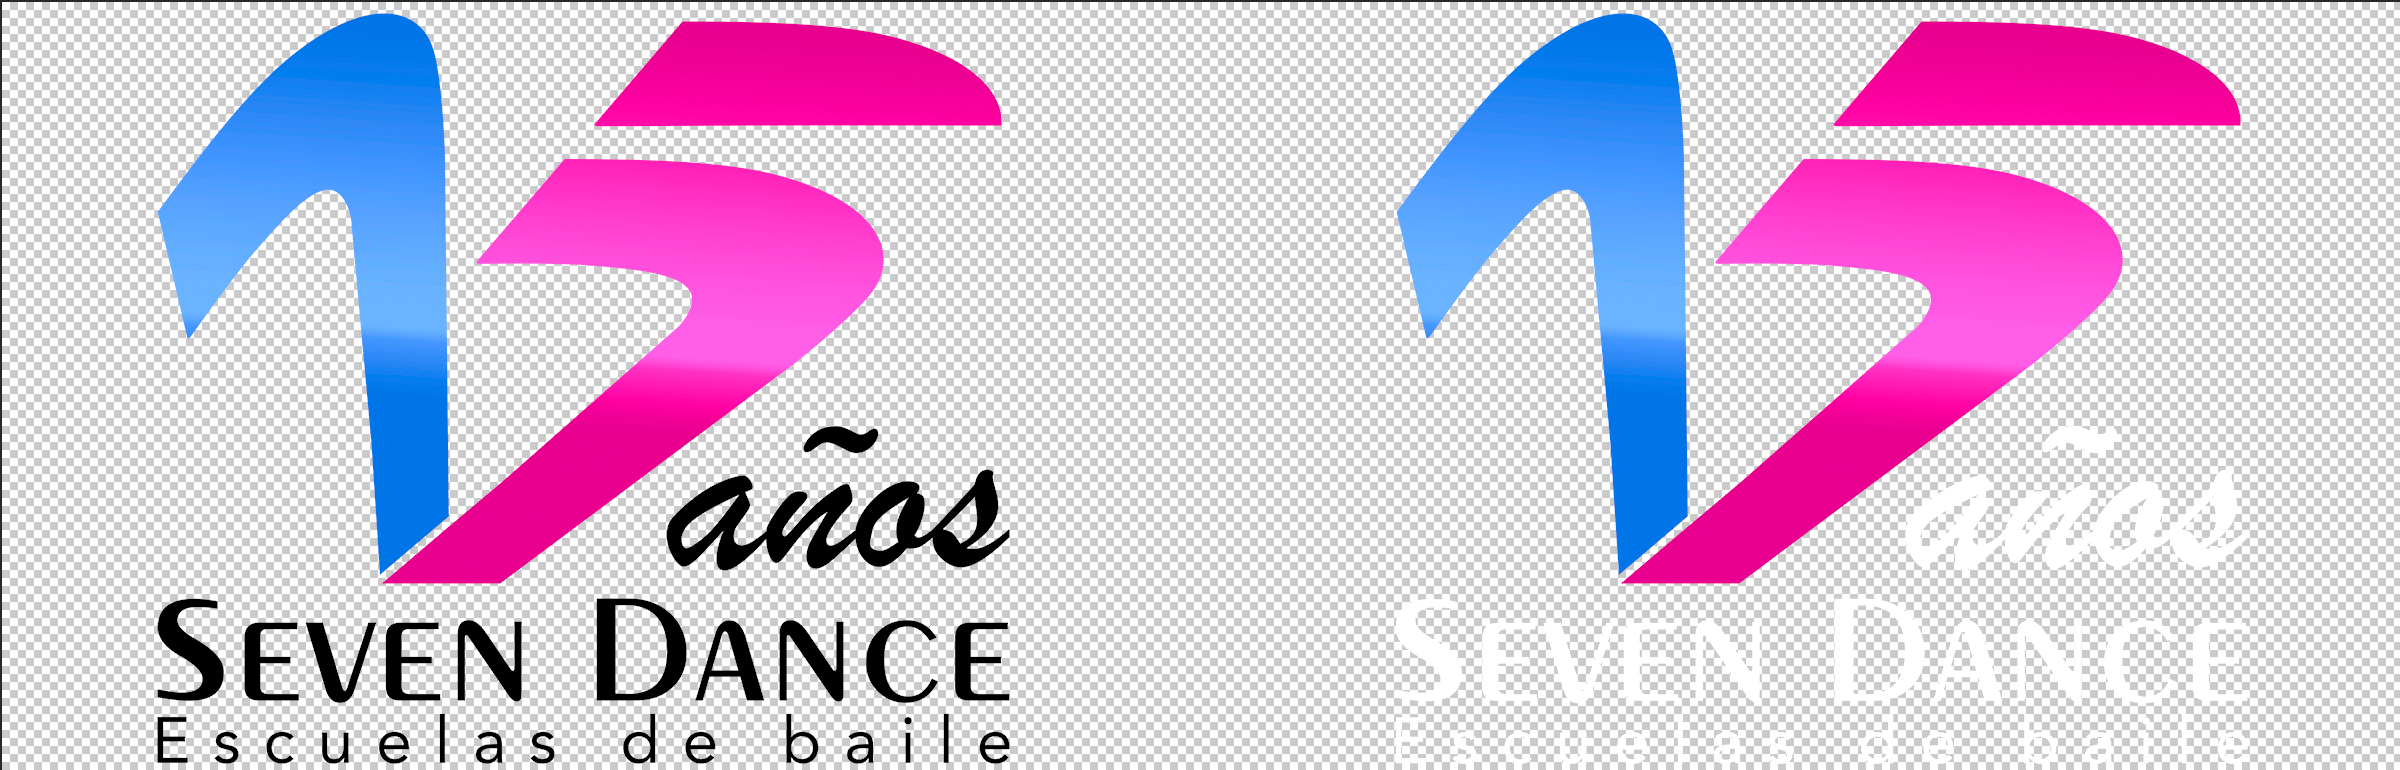 Logo 15 aniversario Seven Dance escuelas de baile